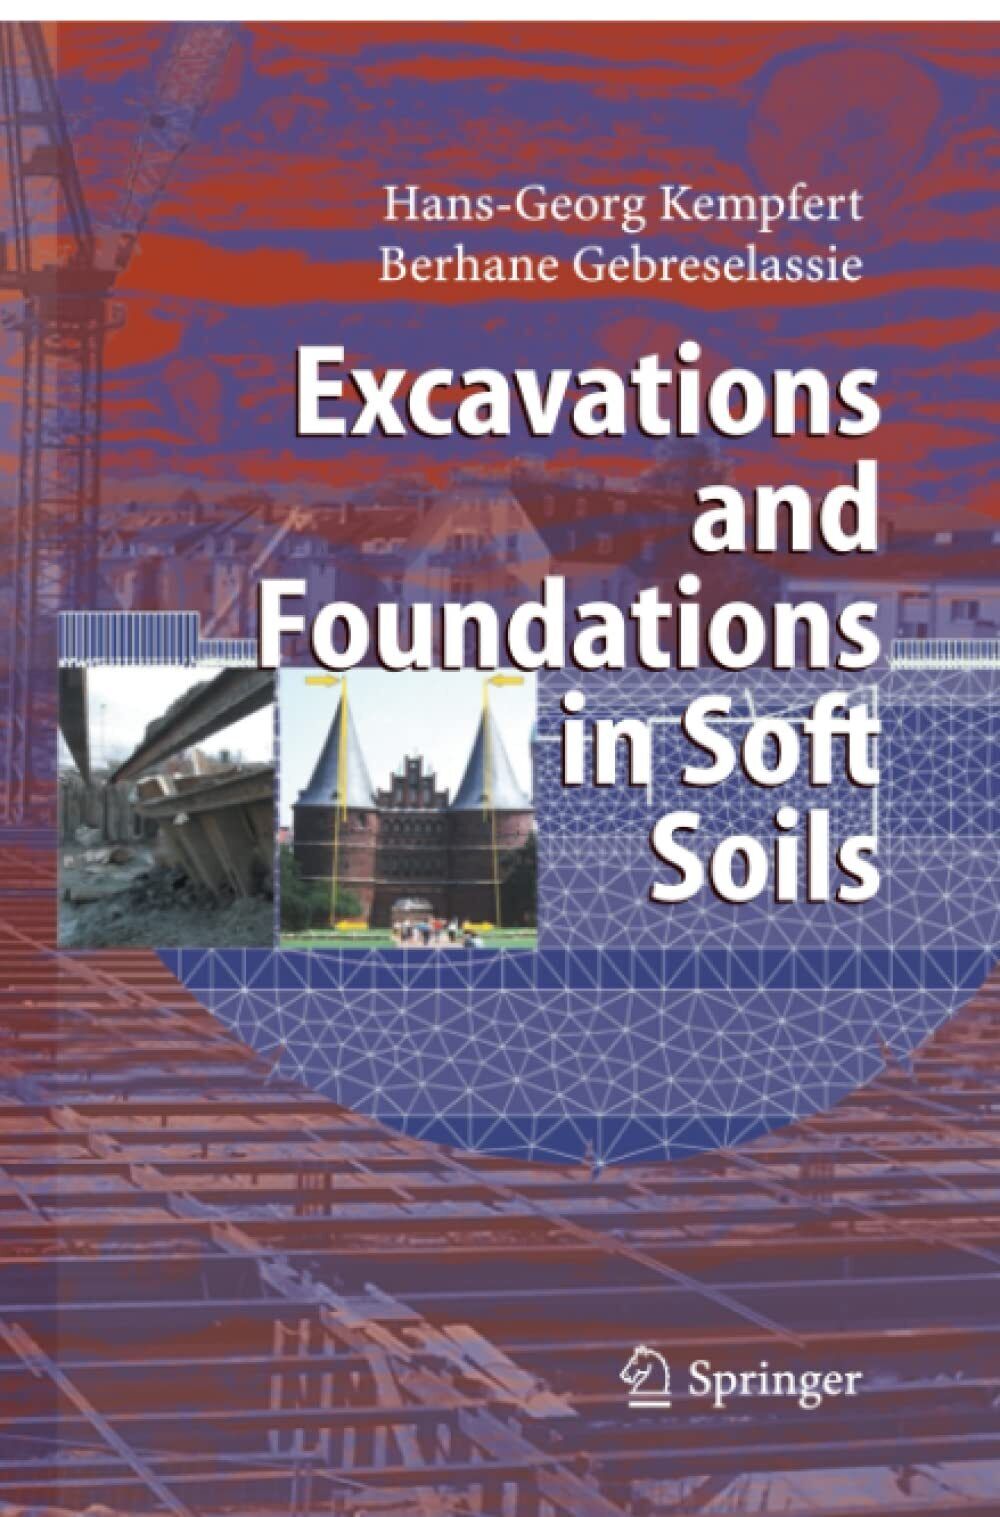 Excavations and Foundations in Soft Soils - Berhane Gebreselassie-Springer, 2010